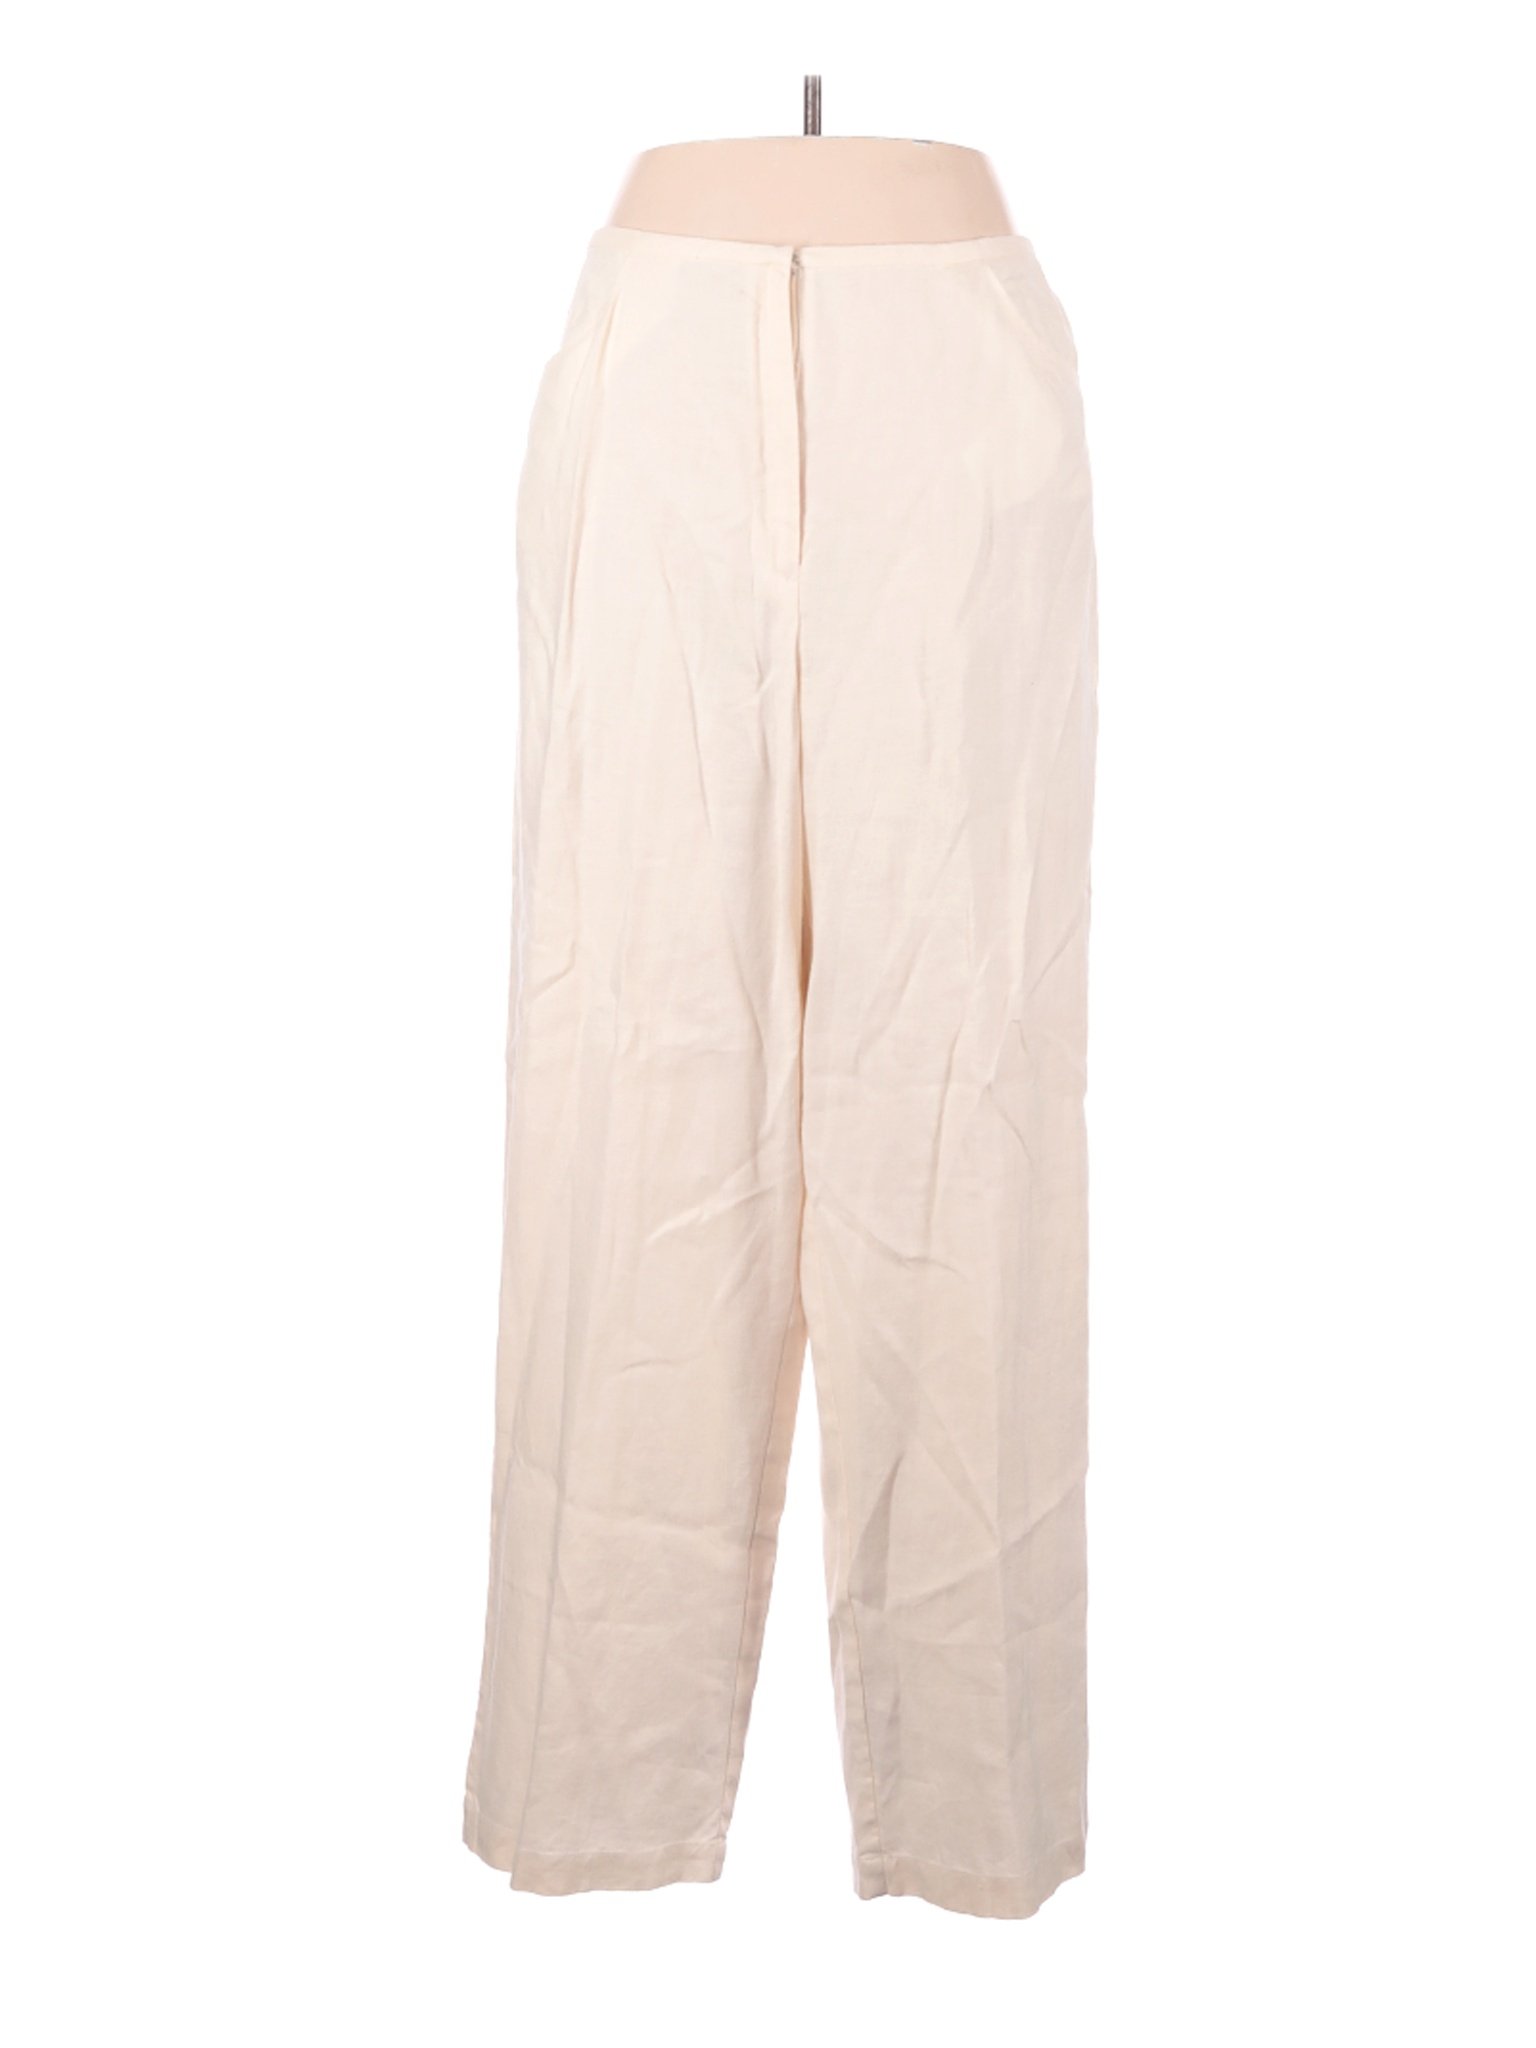 Liz Claiborne Women Ivory Linen Pants XL | eBay